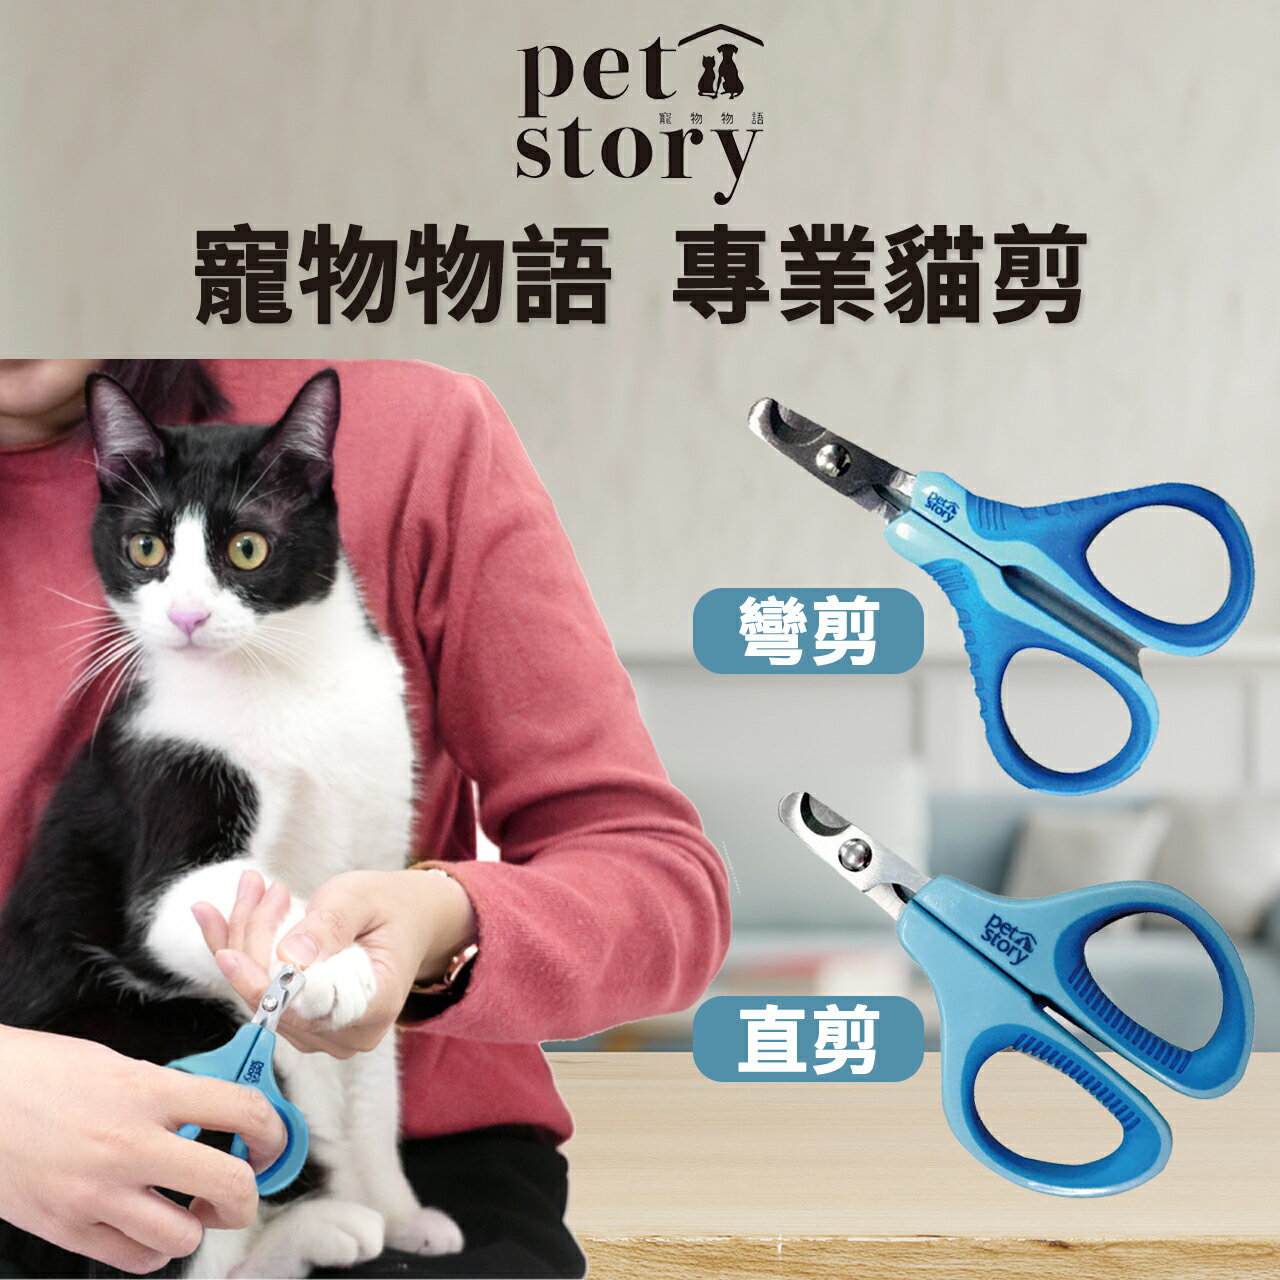 【PETMART】寵物物語 pet story 專業貓剪 修剪指甲/直剪/彎剪